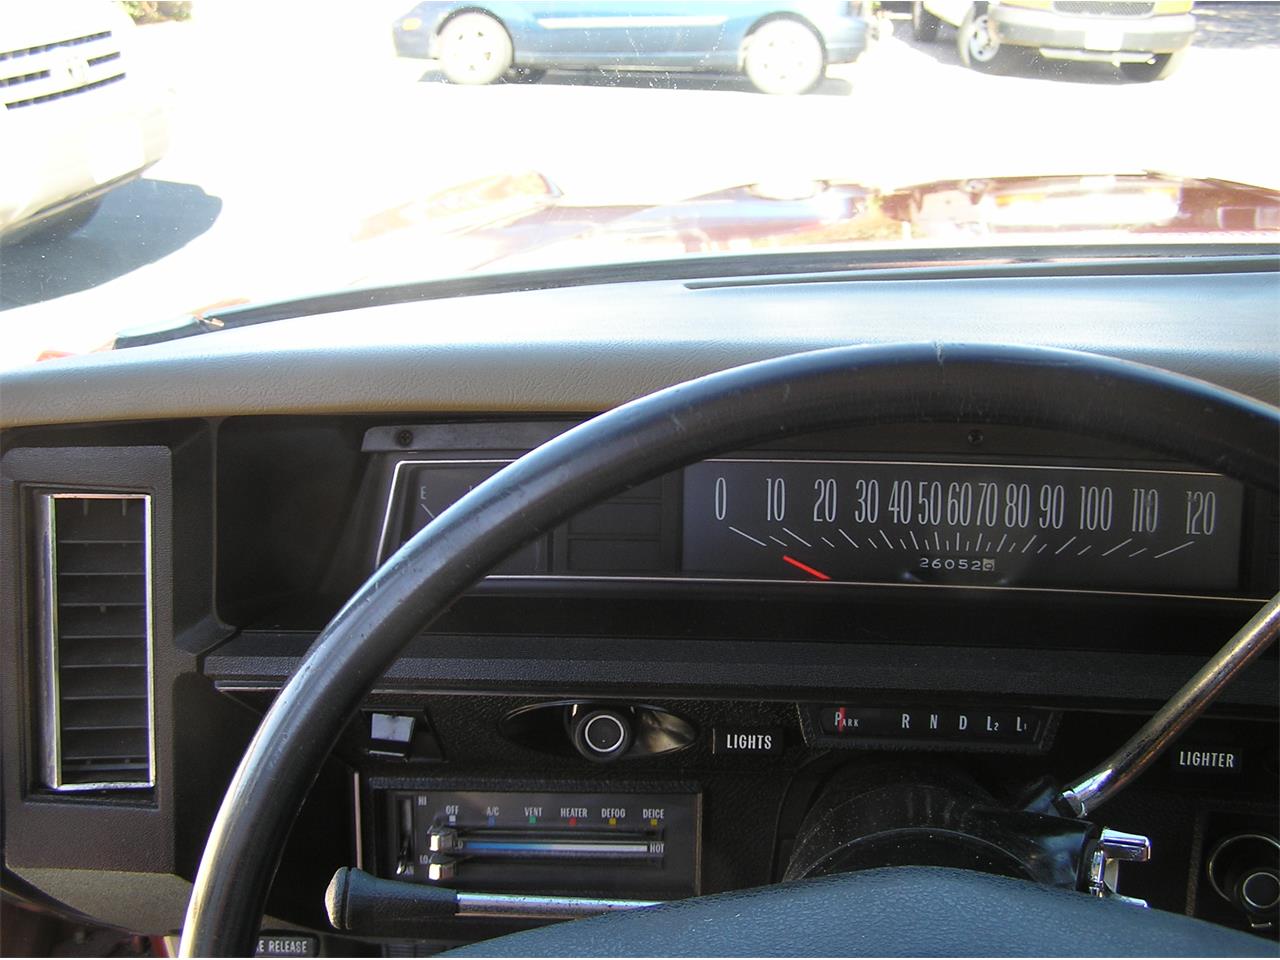 1971 Chevrolet Impala for sale in Poway, CA – photo 29